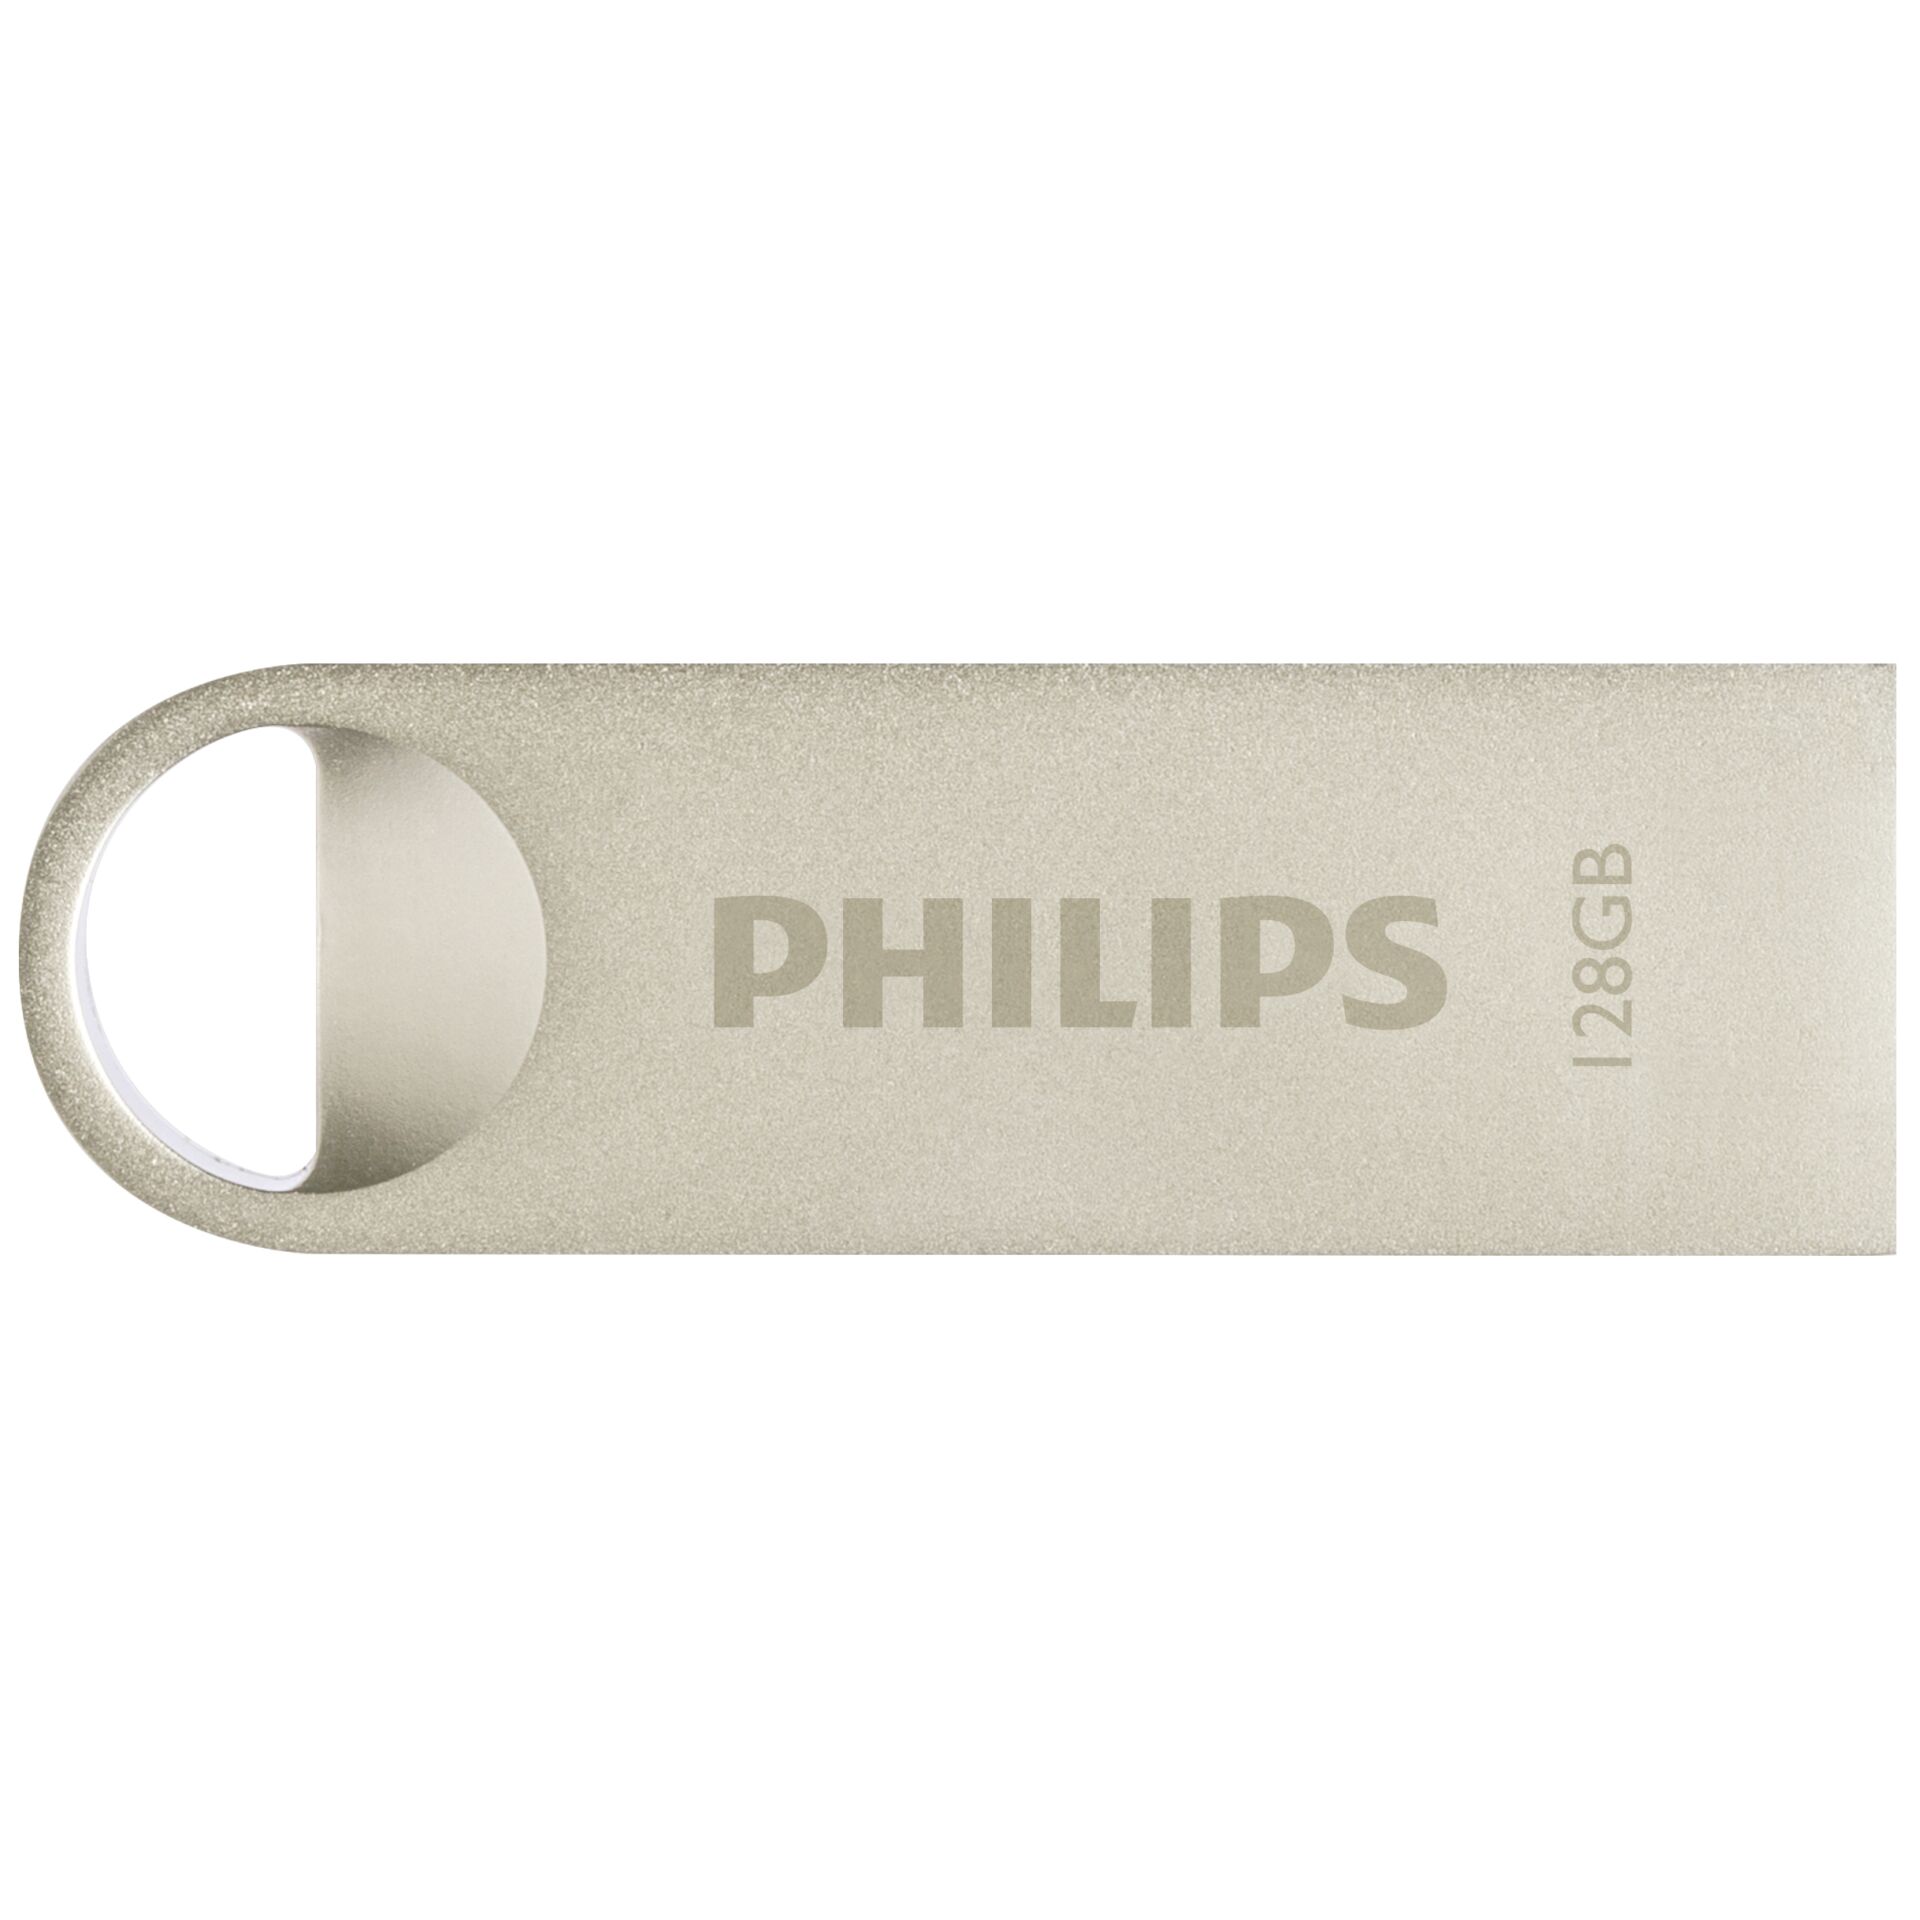 Philips USB 2.0            128GB Moon Vintage argento